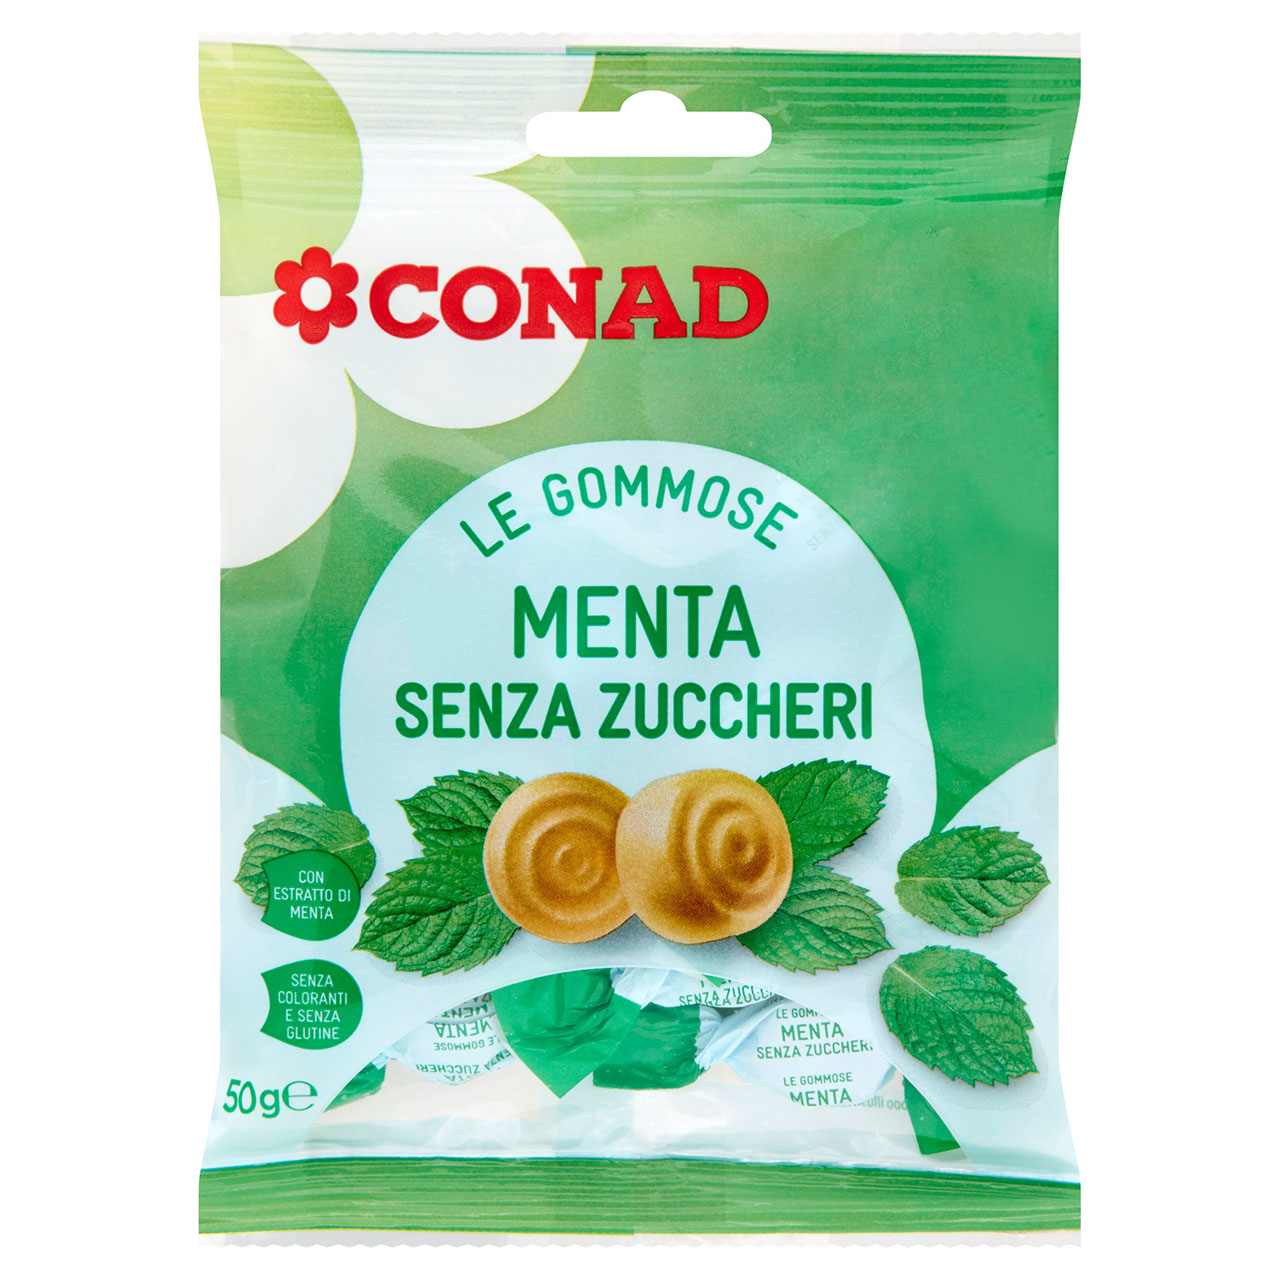 Le Gommose Menta Senza Zucchero 50g Conad online